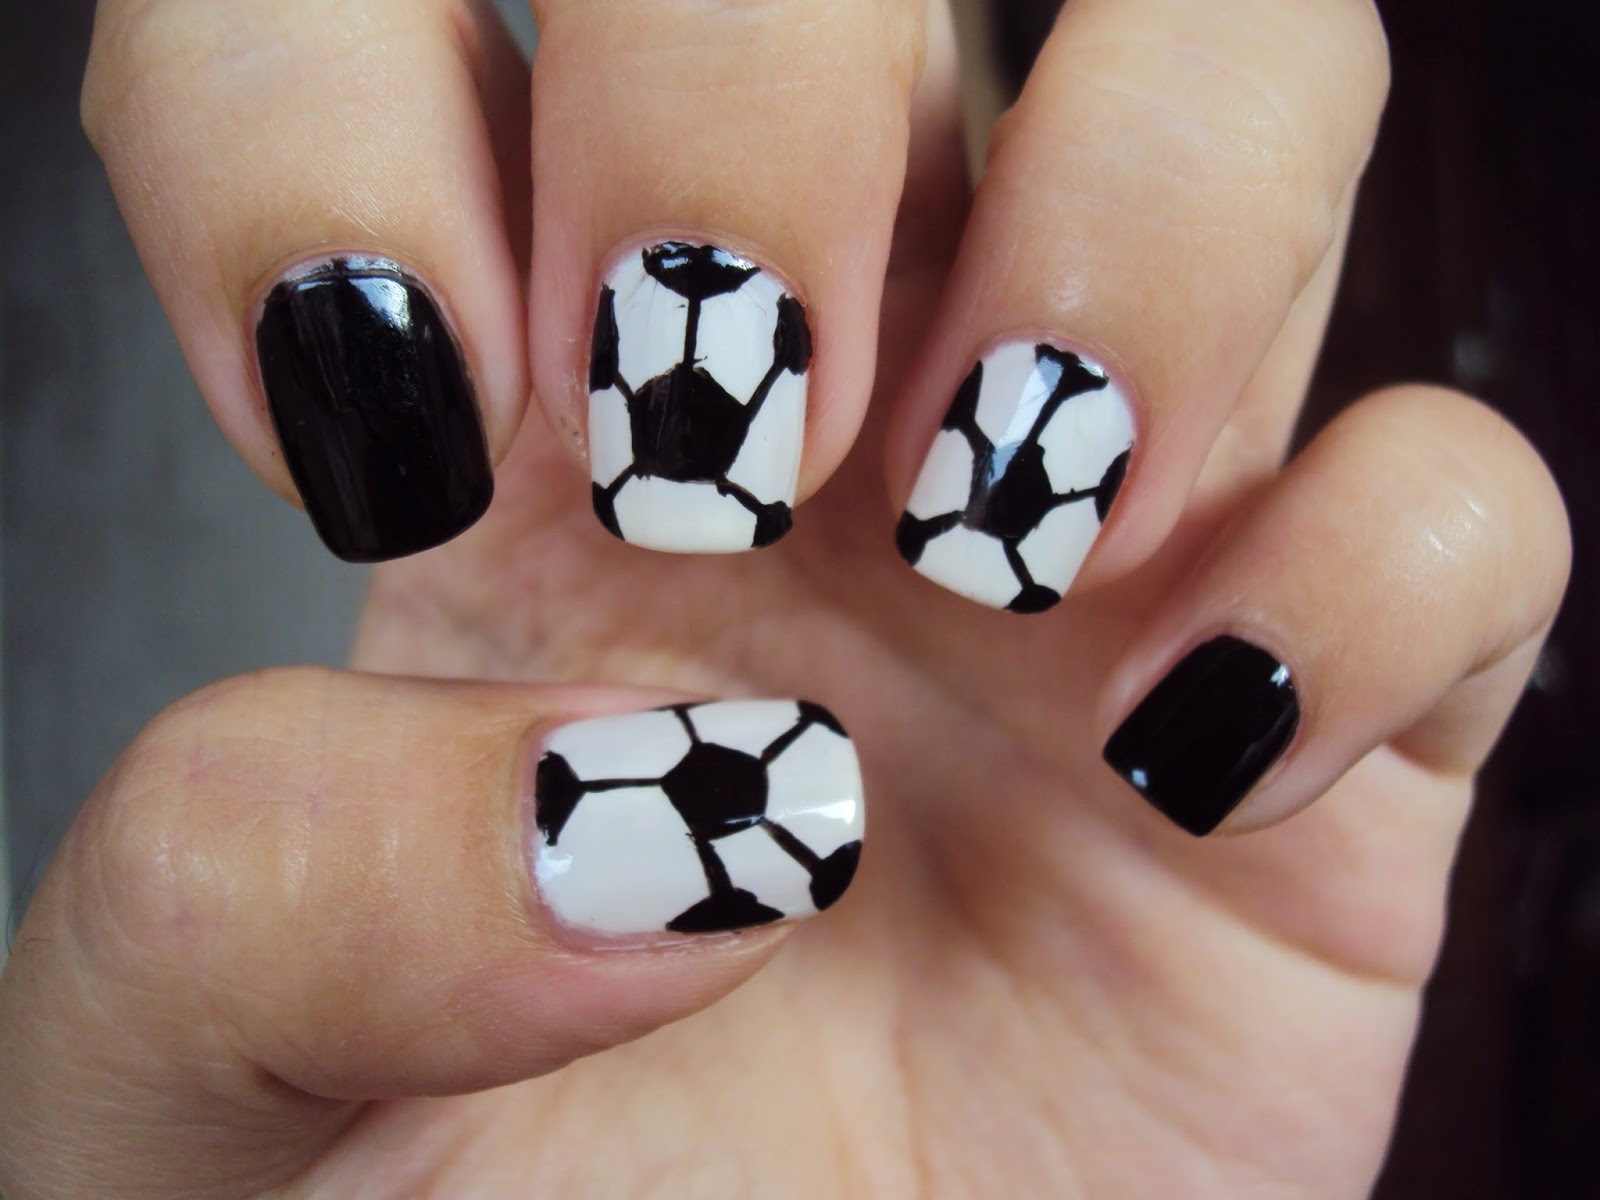 3. Soccer Ball Nail Art Ideas - wide 7